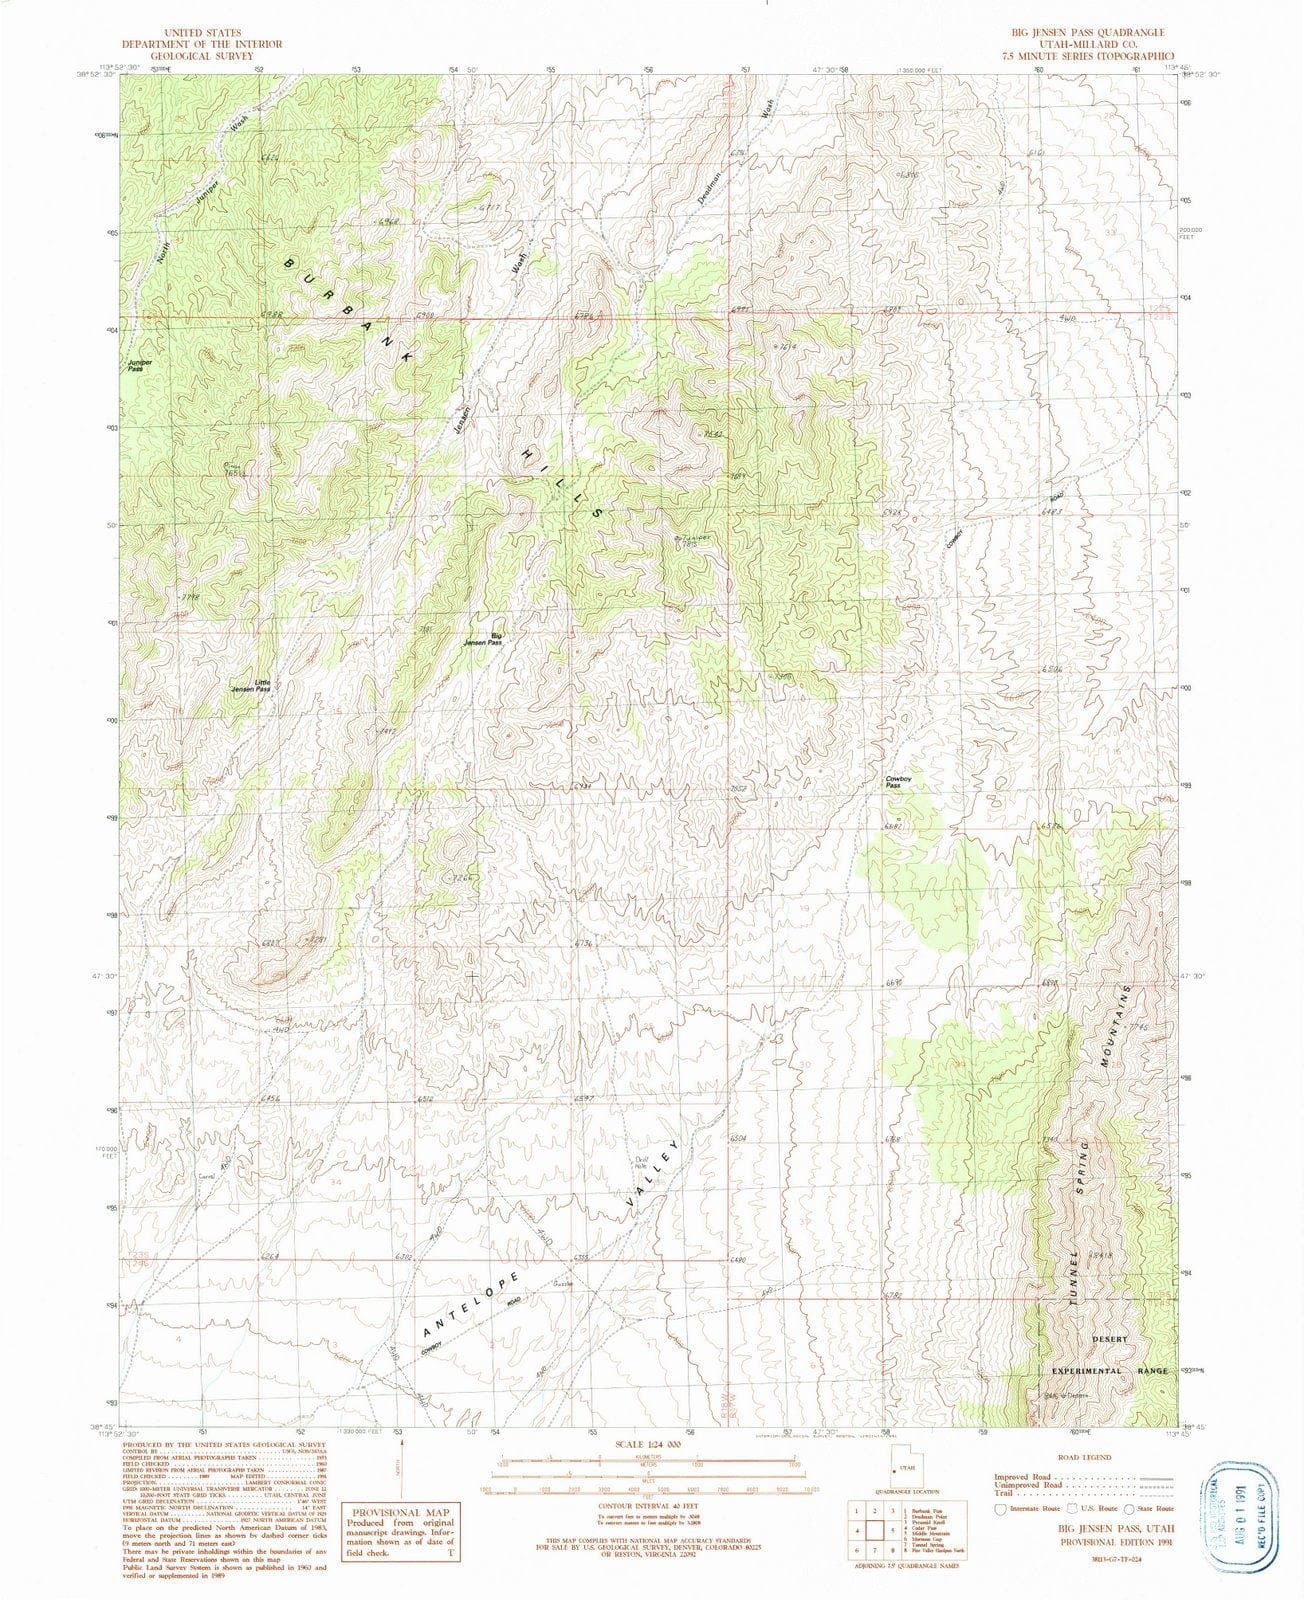 1991 Big Jensen Pass, UT - Utah - USGS Topographic Map